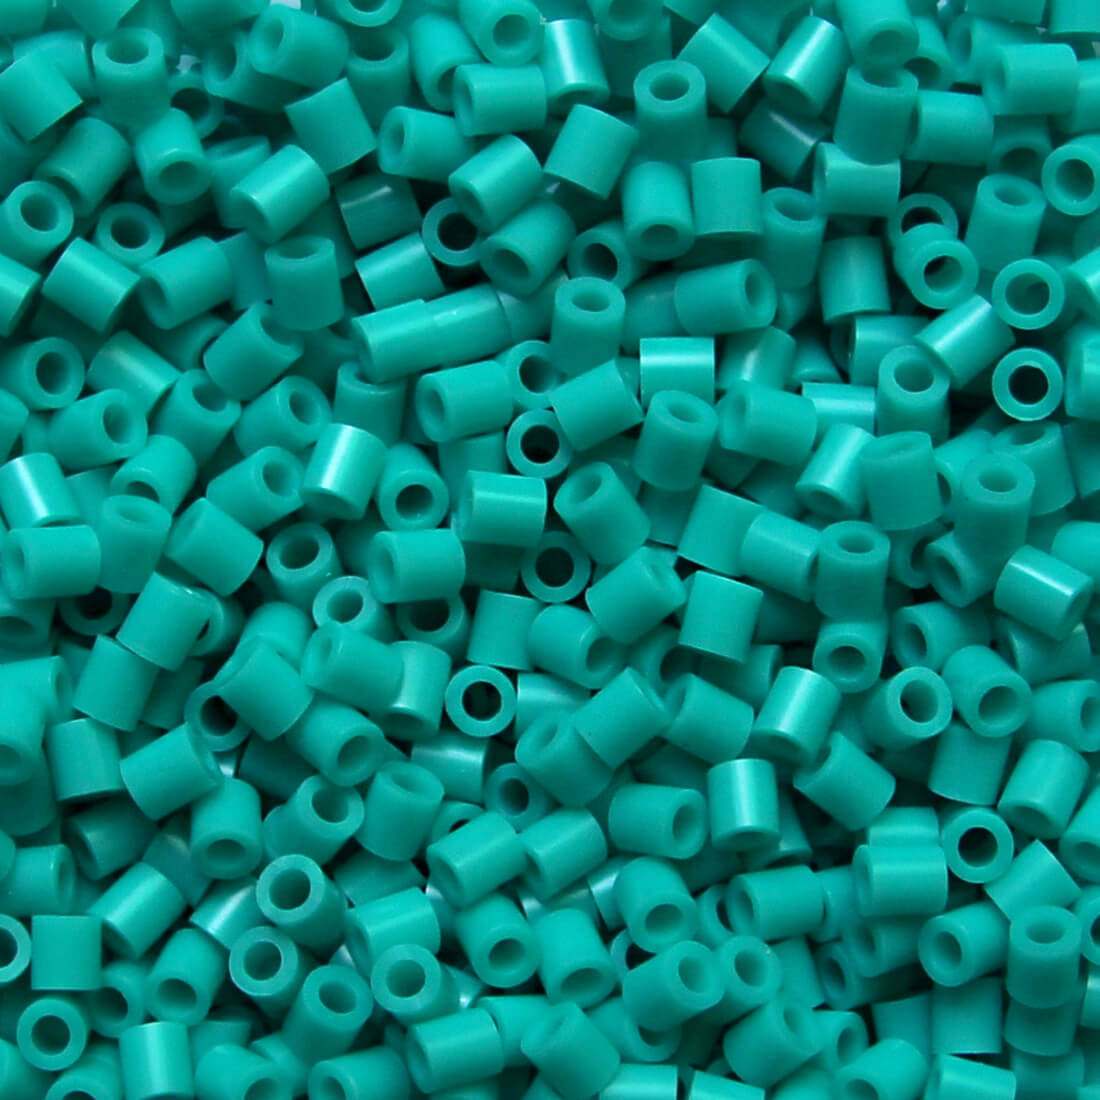 (S01-S50) Midi 1000 beads Single Pack